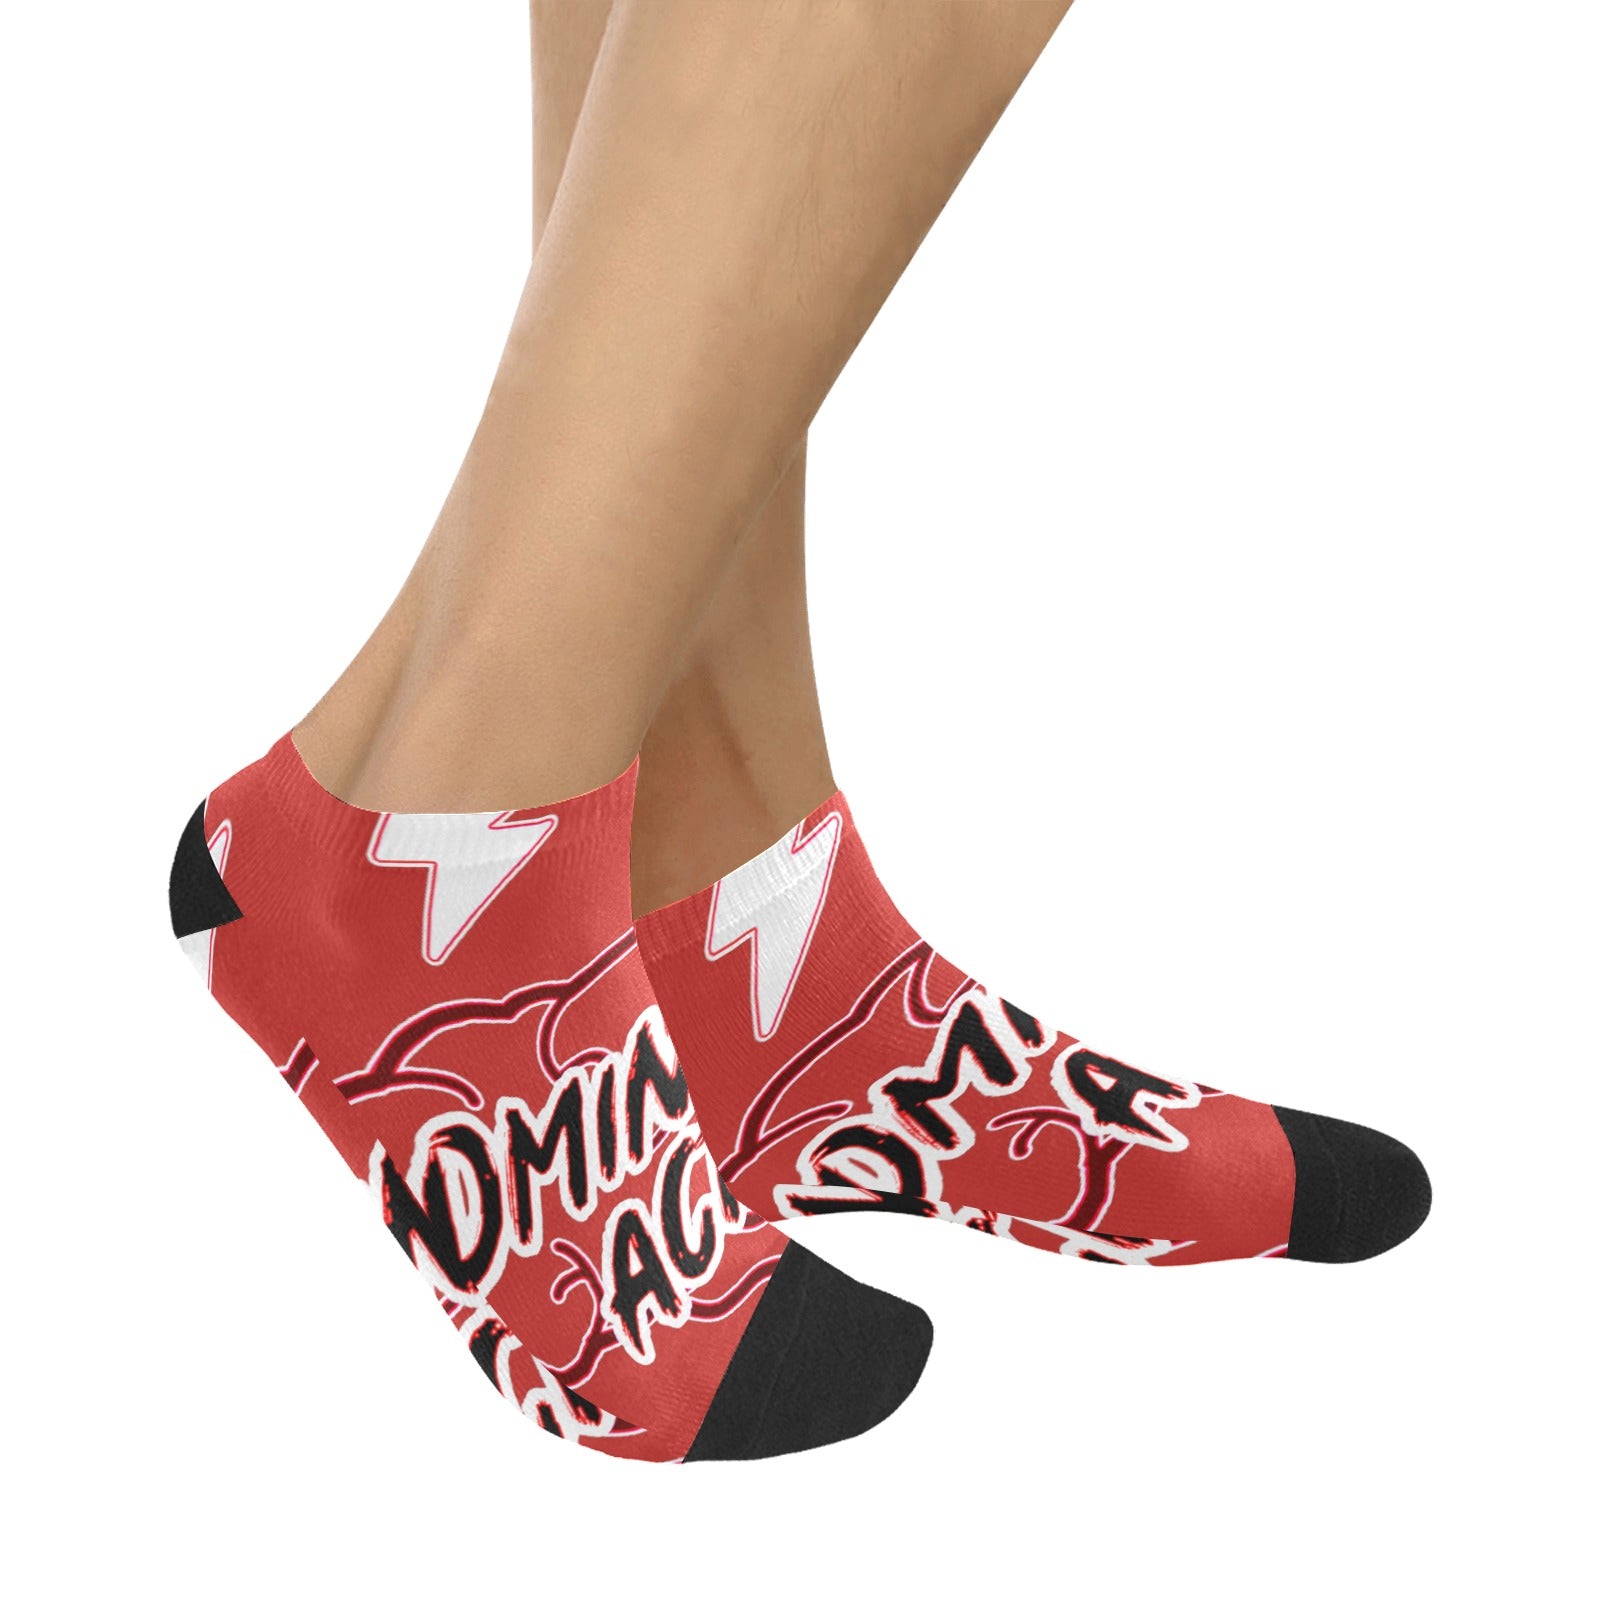 fz men's mind ankle socks one size / fz mind socks - red men's ankle socks